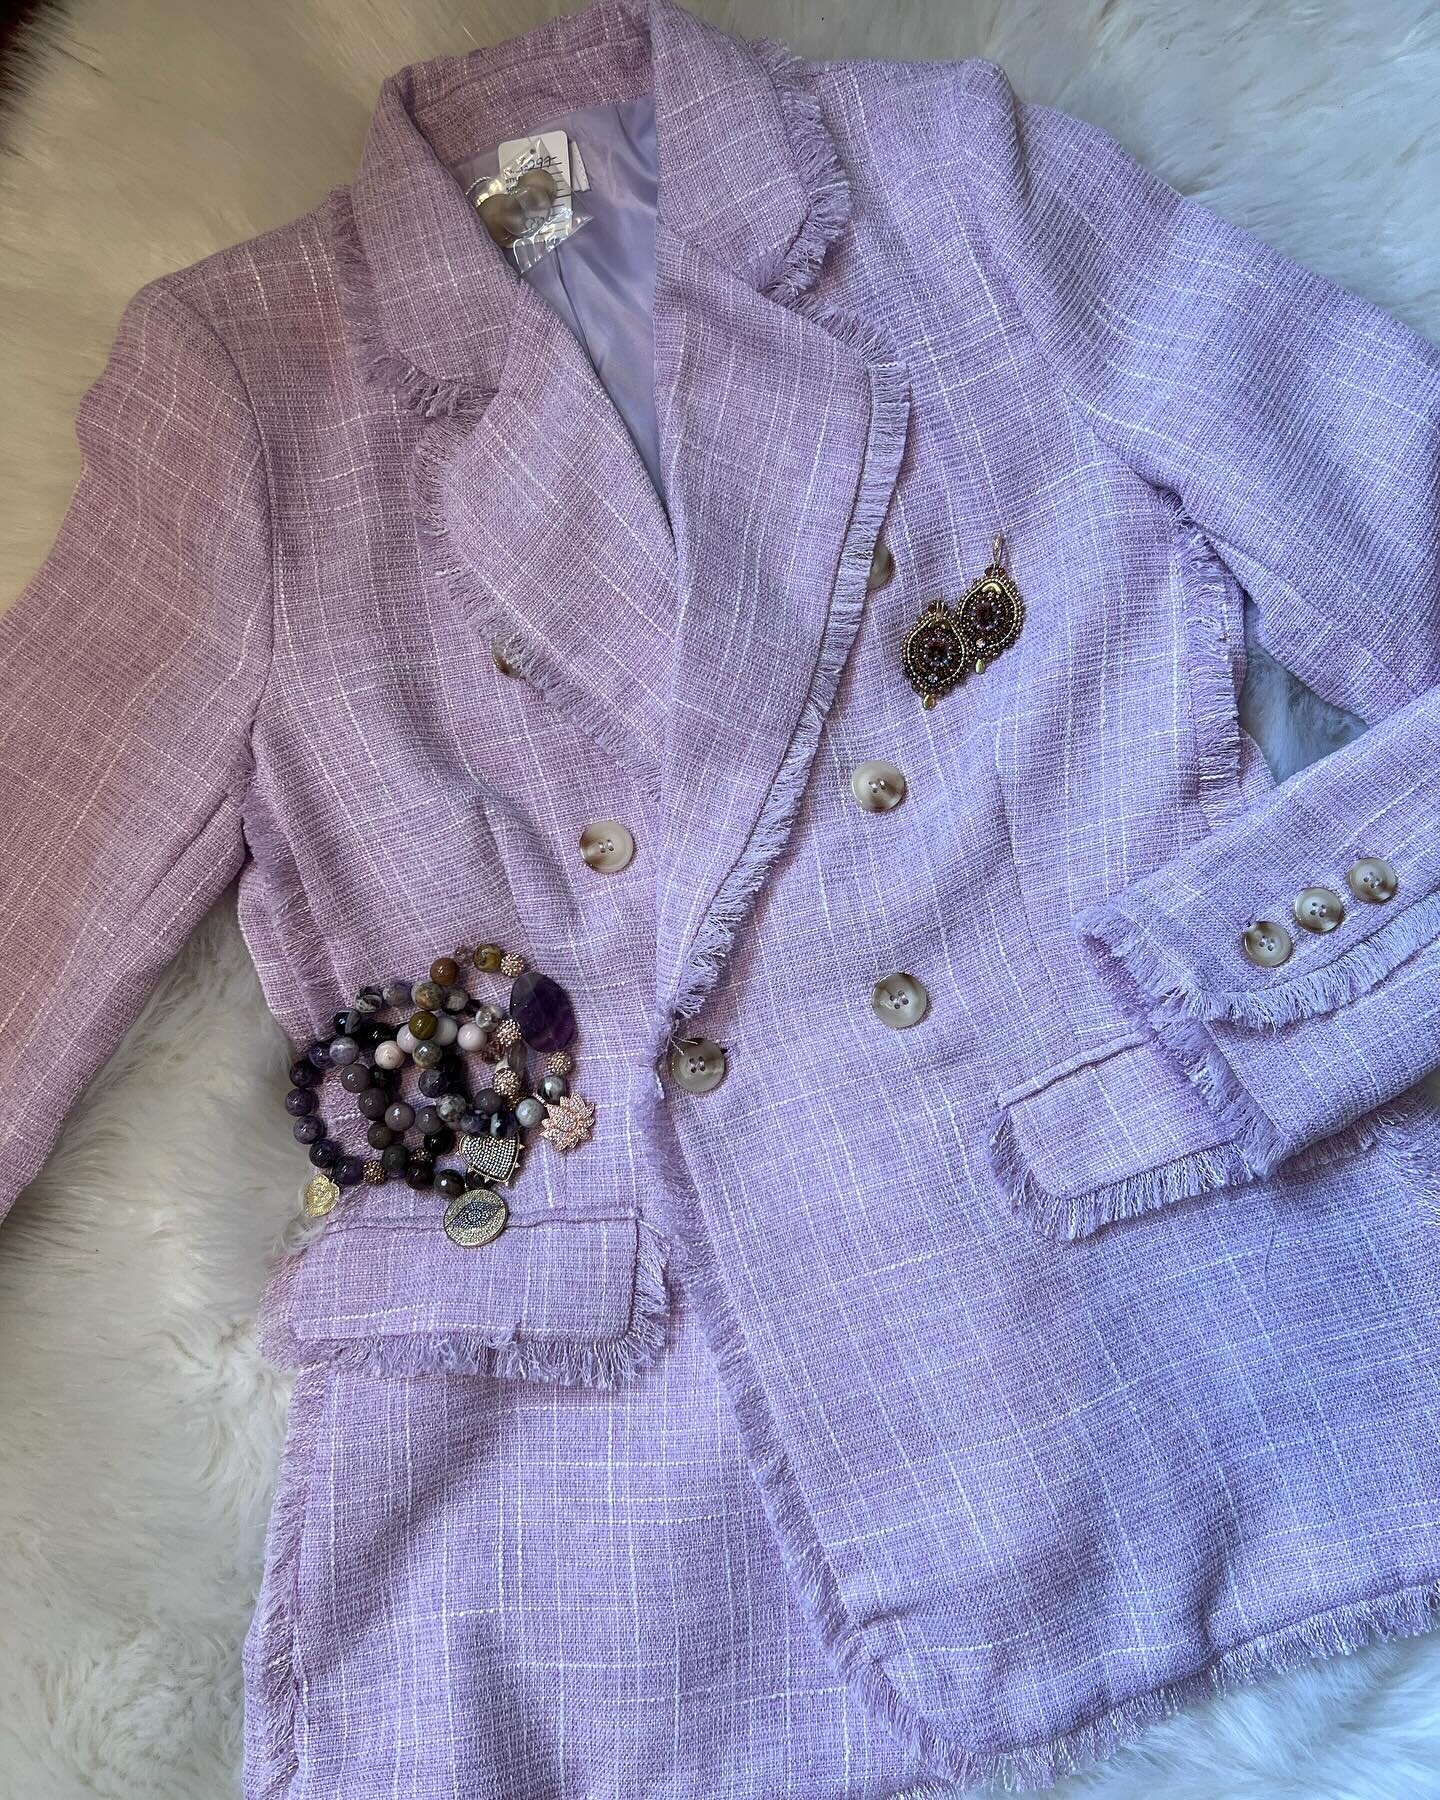 Loving lavender right now&hellip;#lavender #tweed #blazer #saylavie #maudegrahamjewelry #hearts #lotusflower